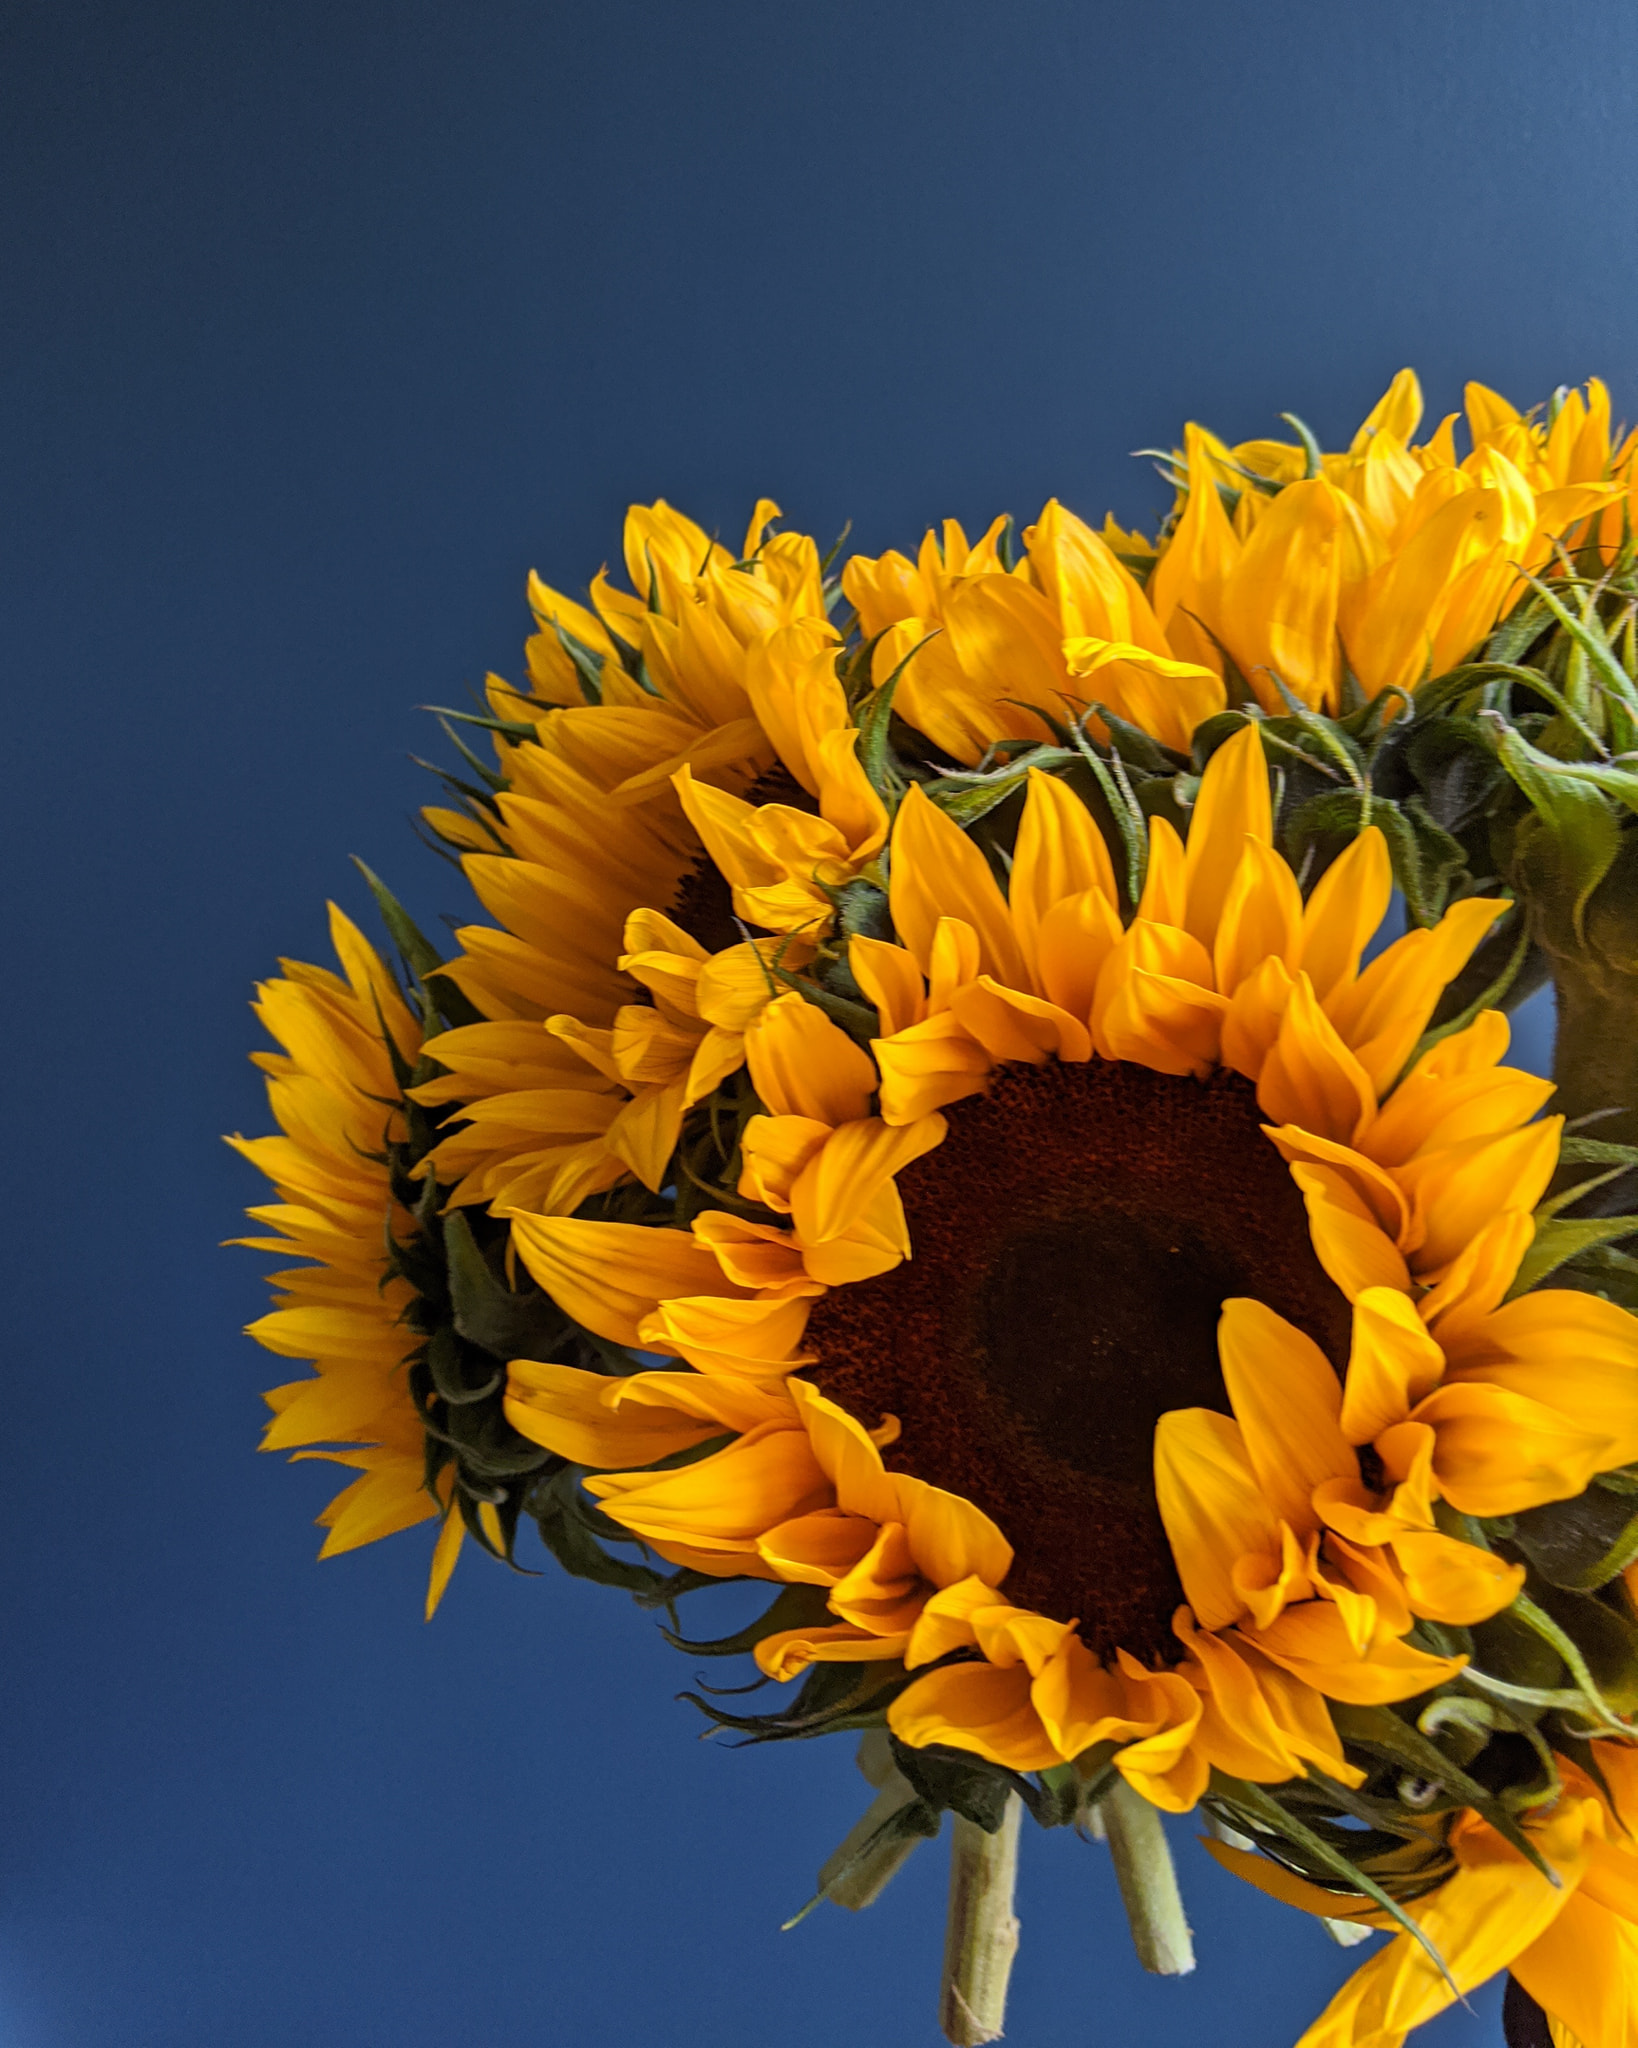 arena flowers subscription review sunflowers liquid grain